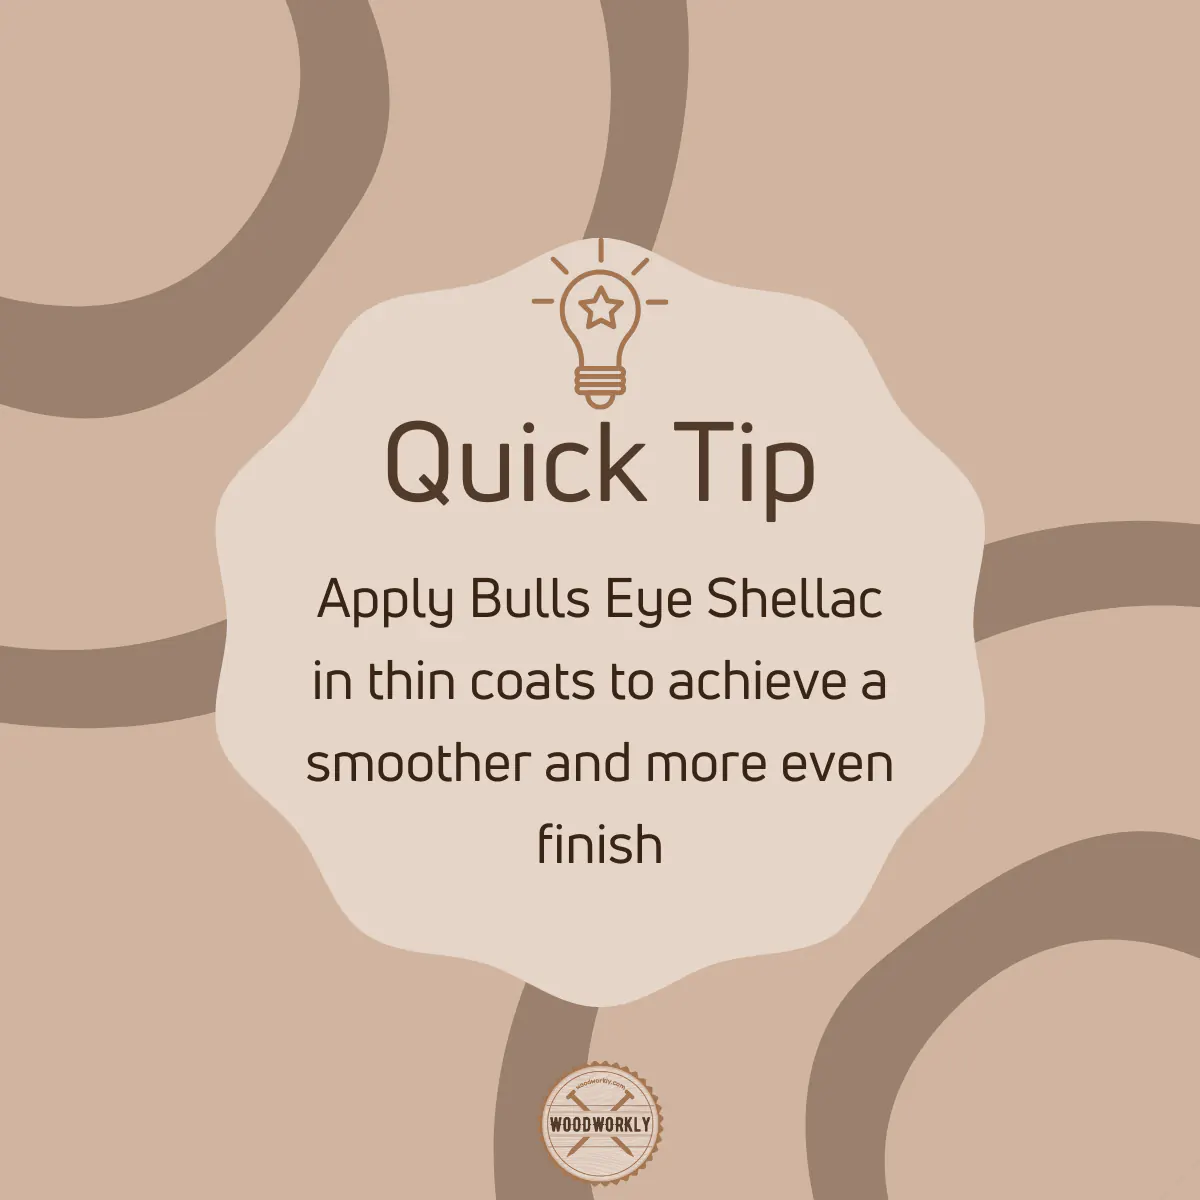 Tip for applying Bulls Eye Shellac